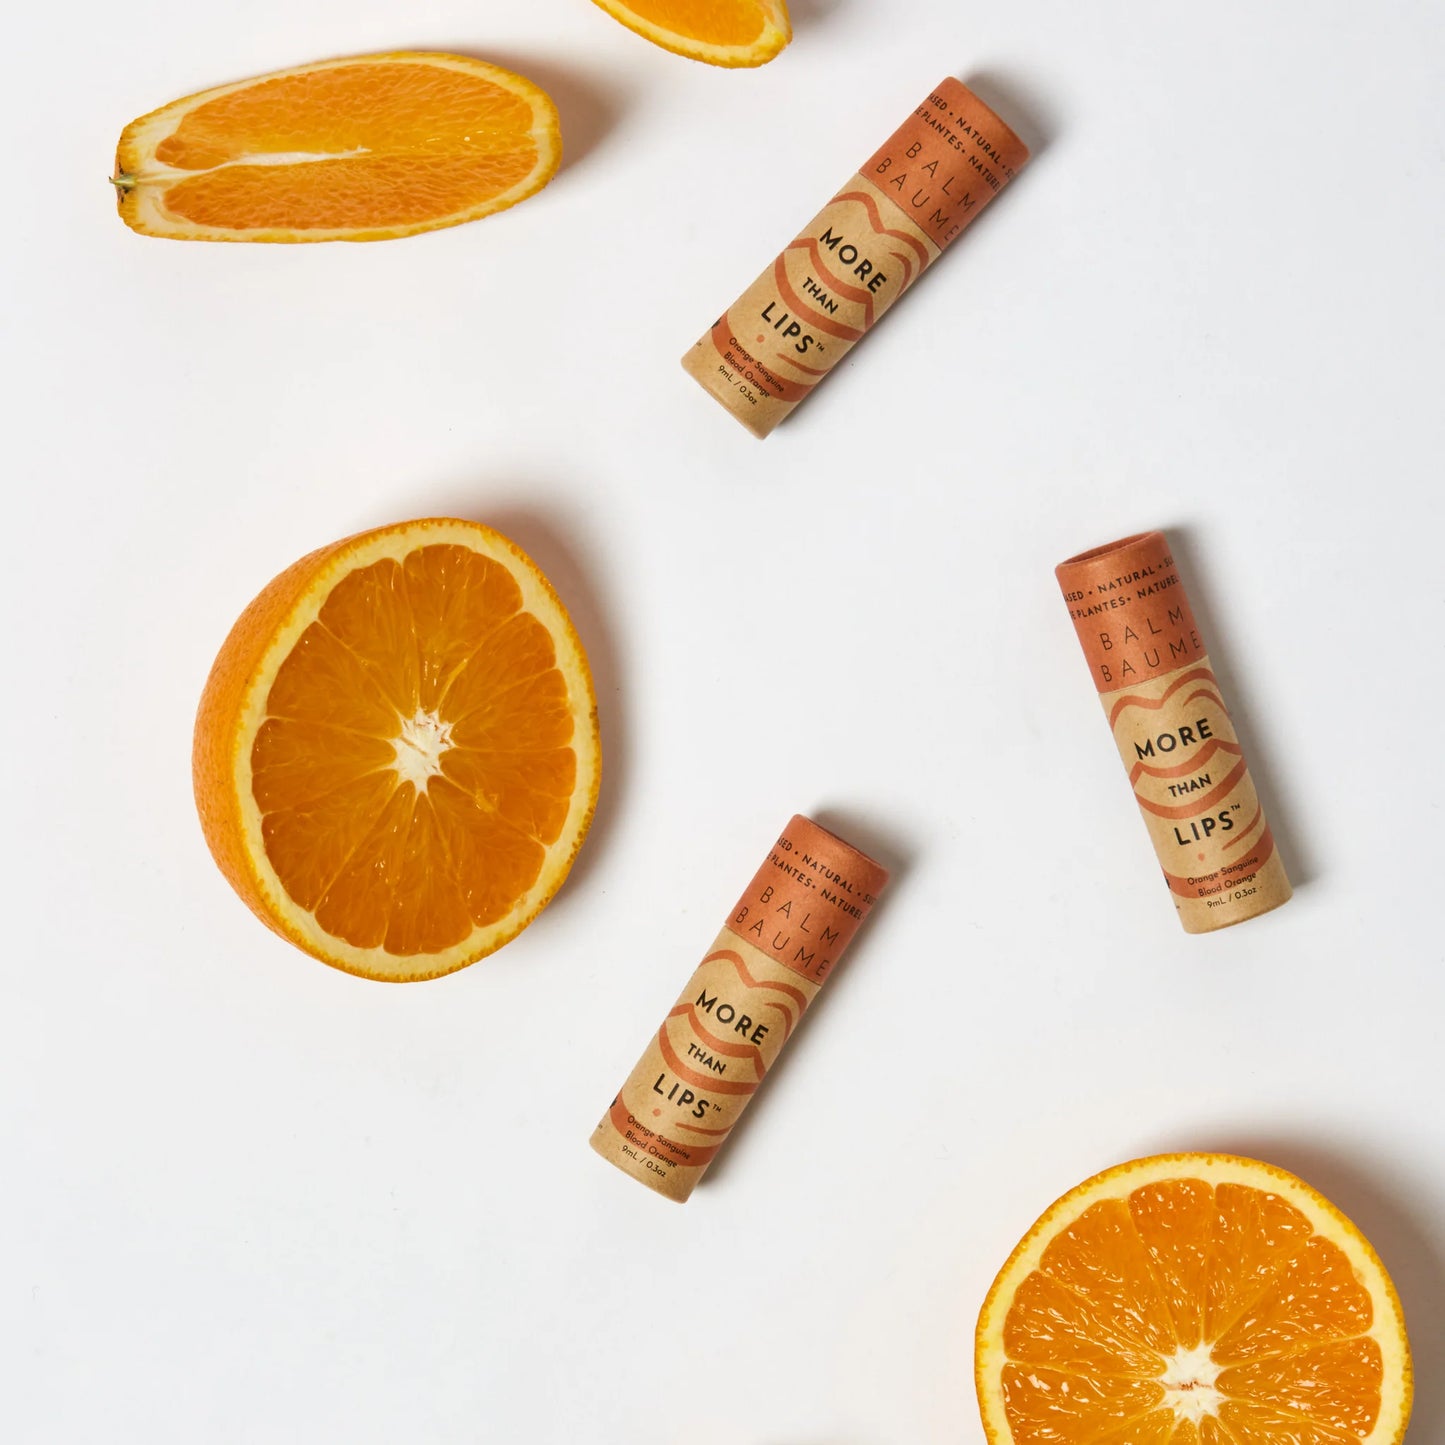 More Than Lips | Balm: Blood Orange (9ml)